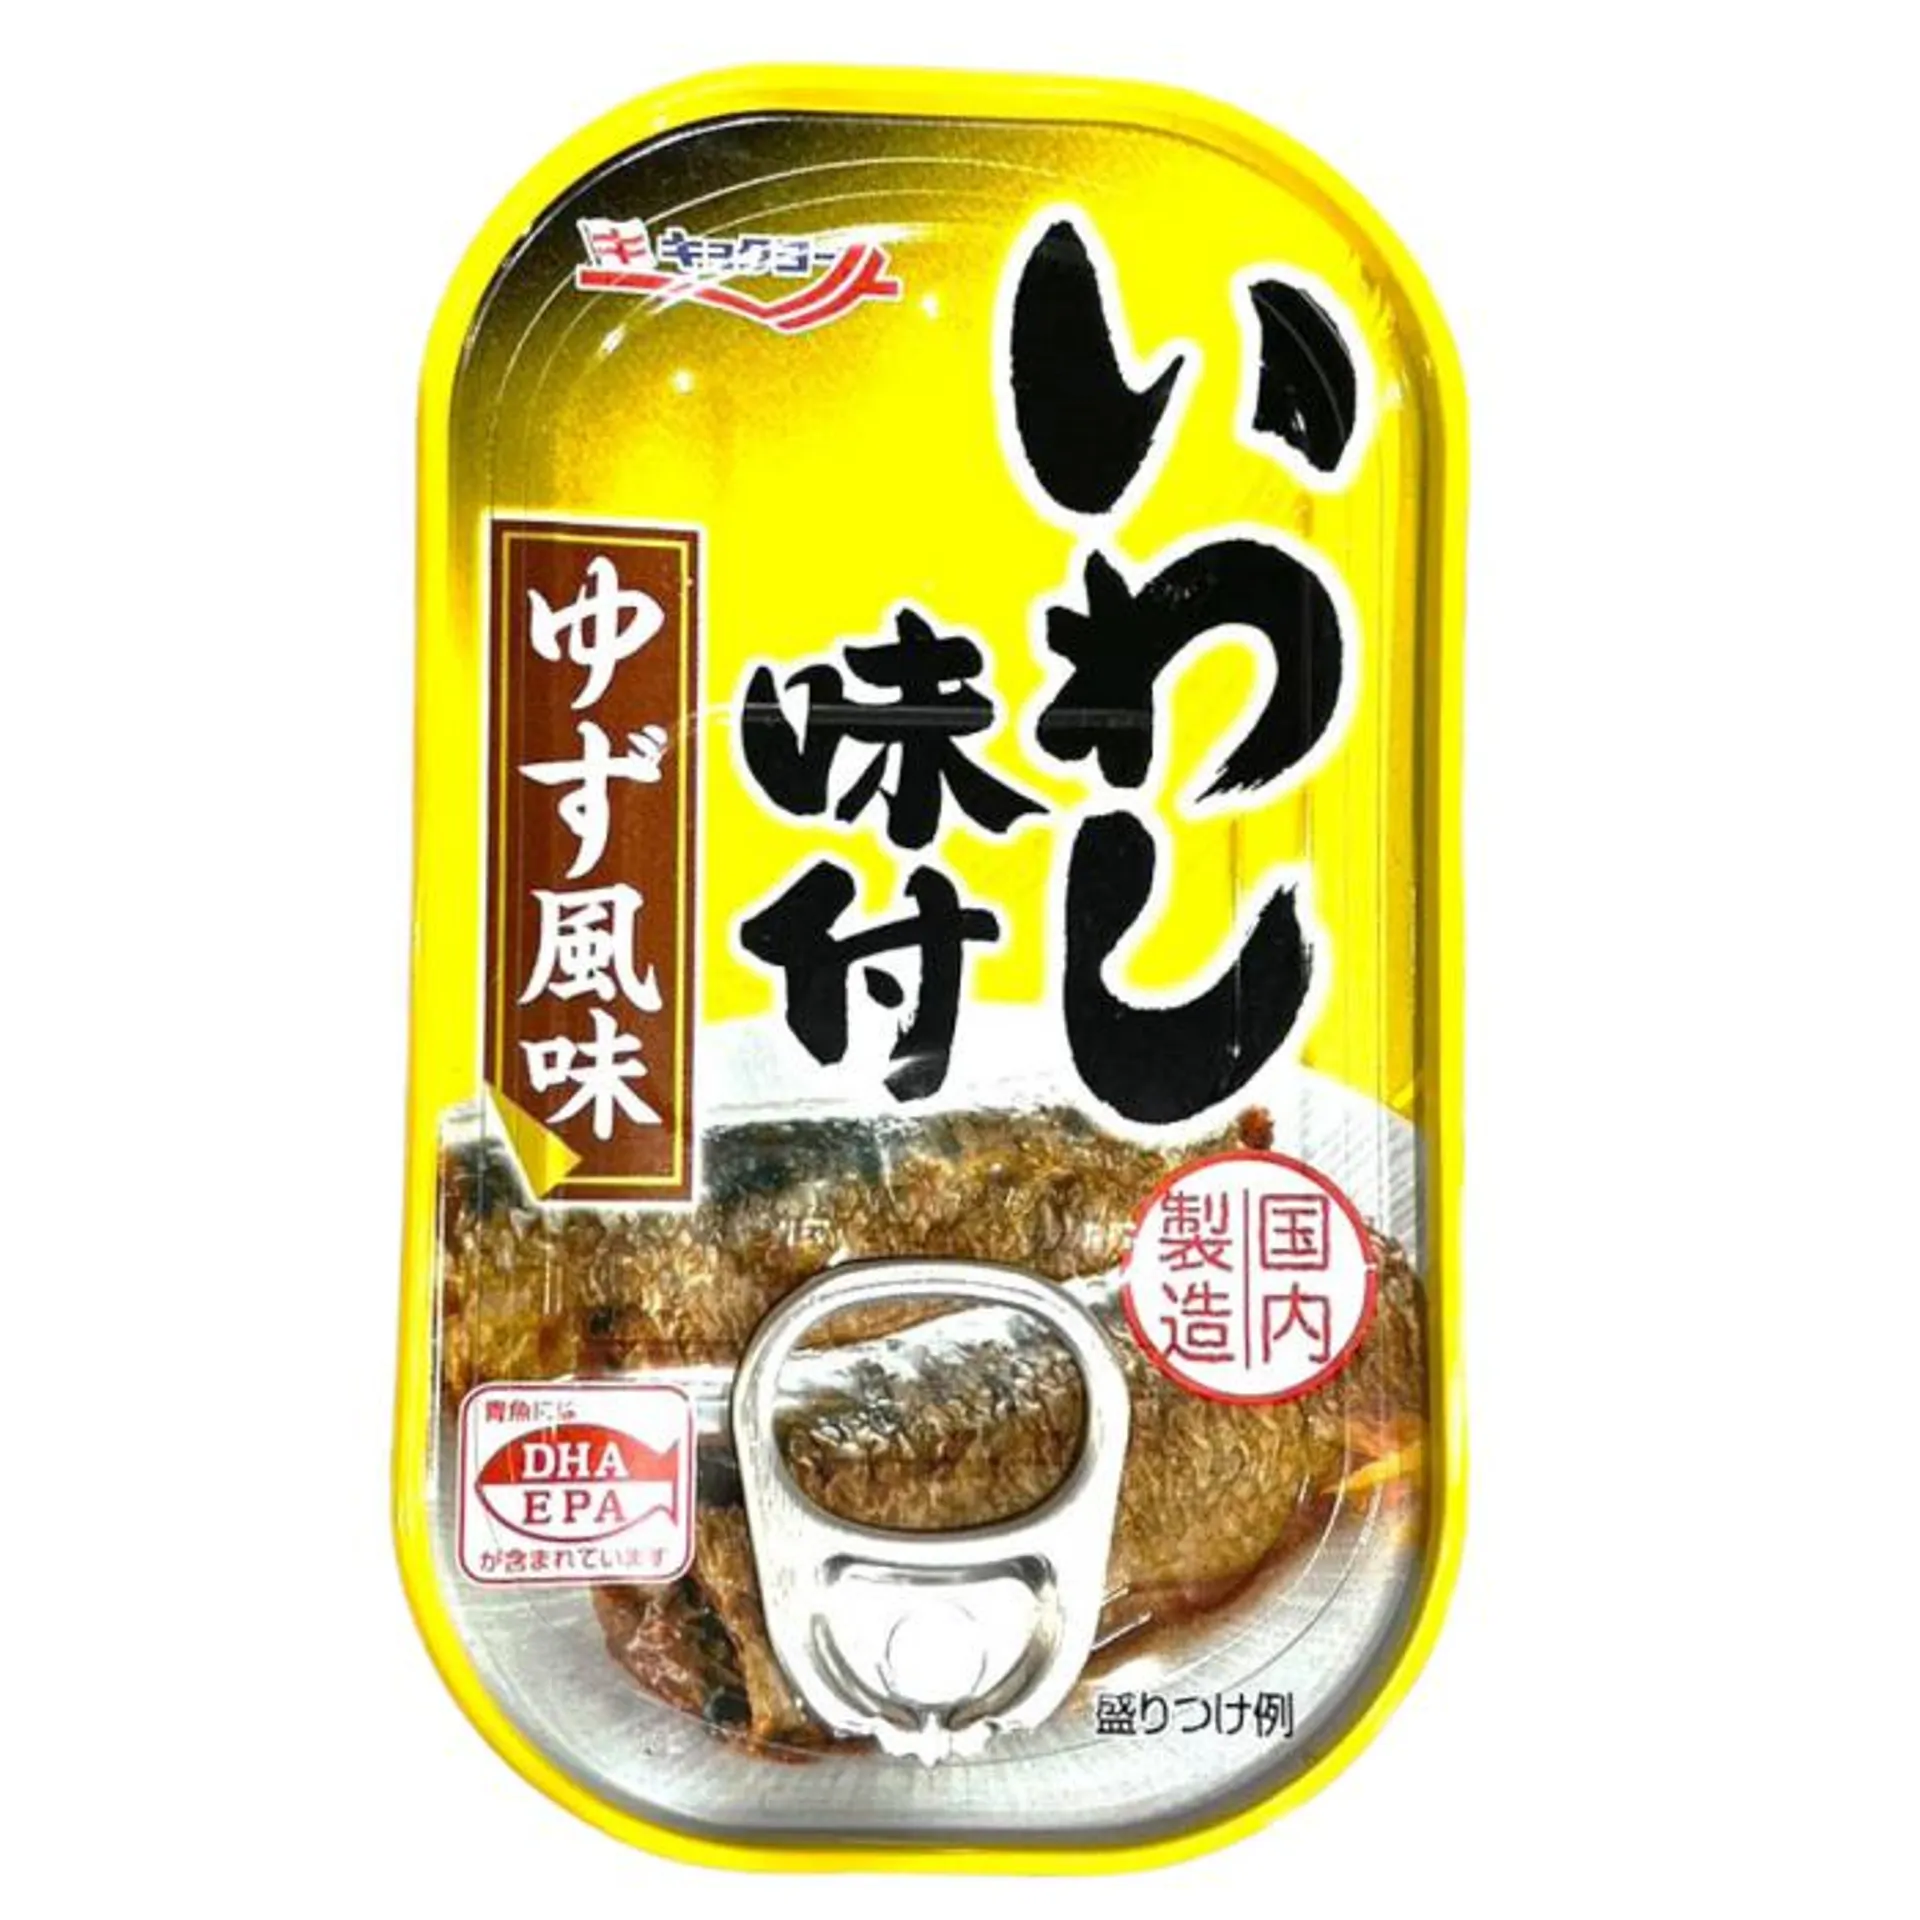 KYOKUYO / SARDINE YUZU FLAVOUR / CANNED FISH (SARDINOPS MELANOSTICTUS) 100g